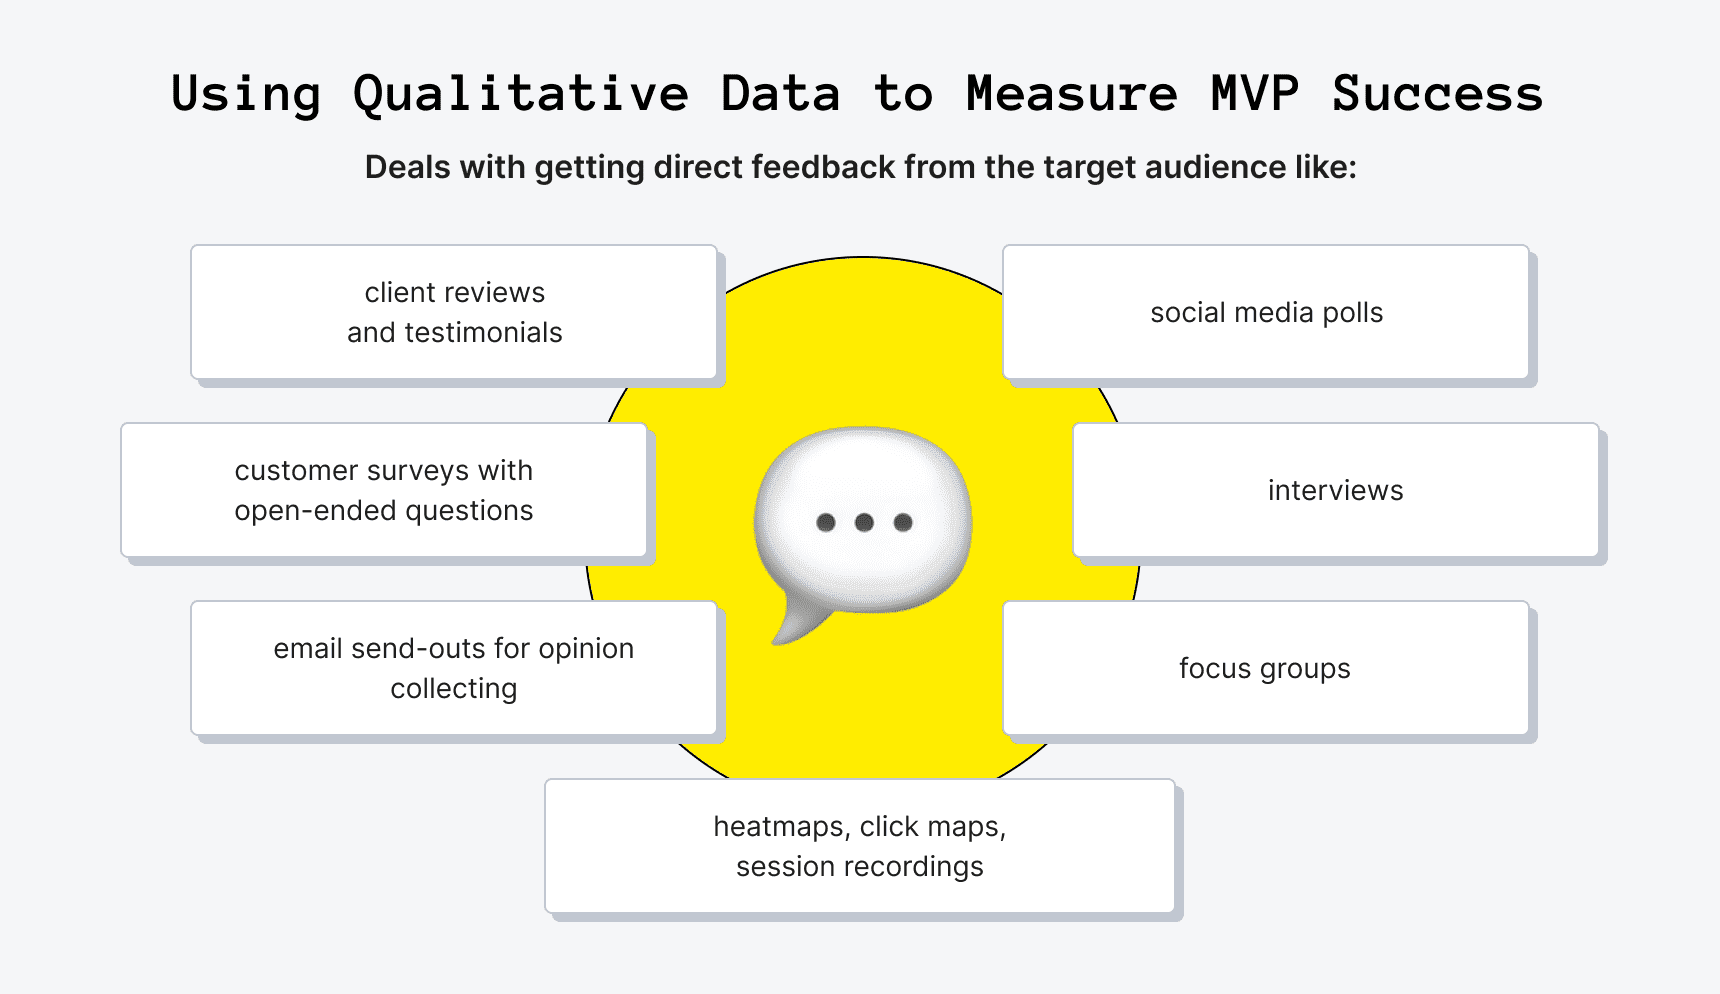 Qualitative data for MVP success measurement